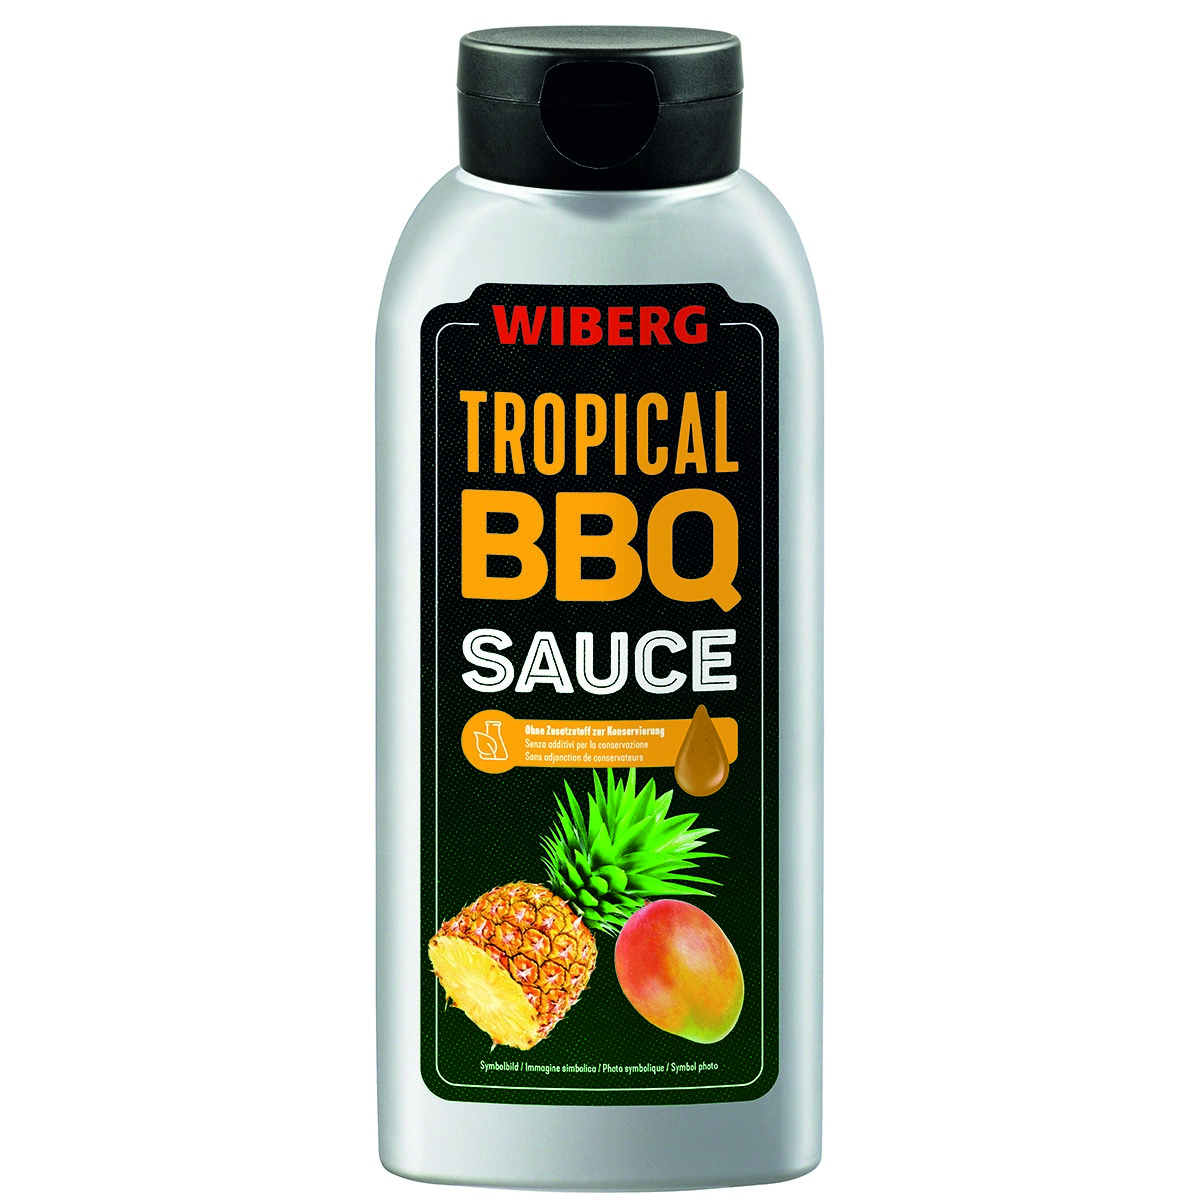 WIBERG Tropical BBQ Sauce